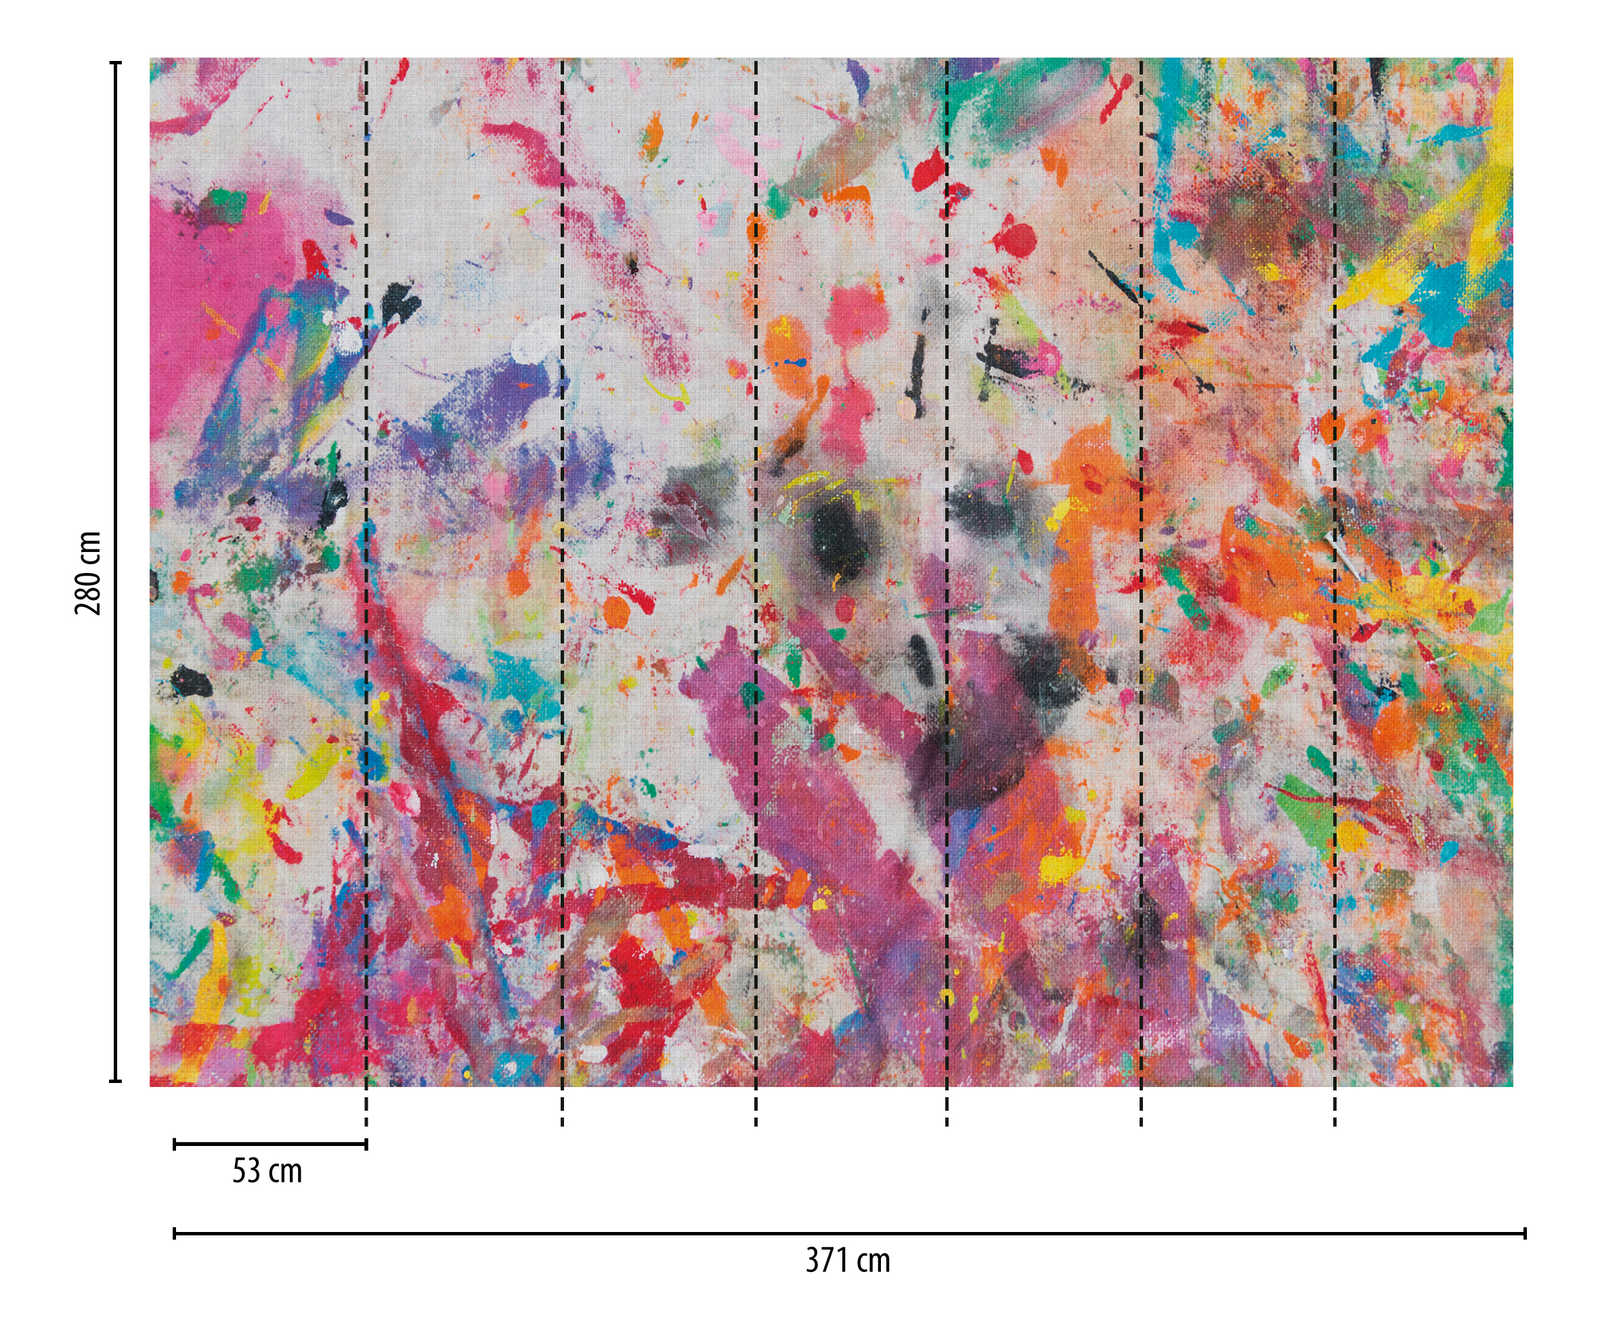             Papeles pintados novedad - papel pintado motivo lienzo colorido, diseño abstracto
        